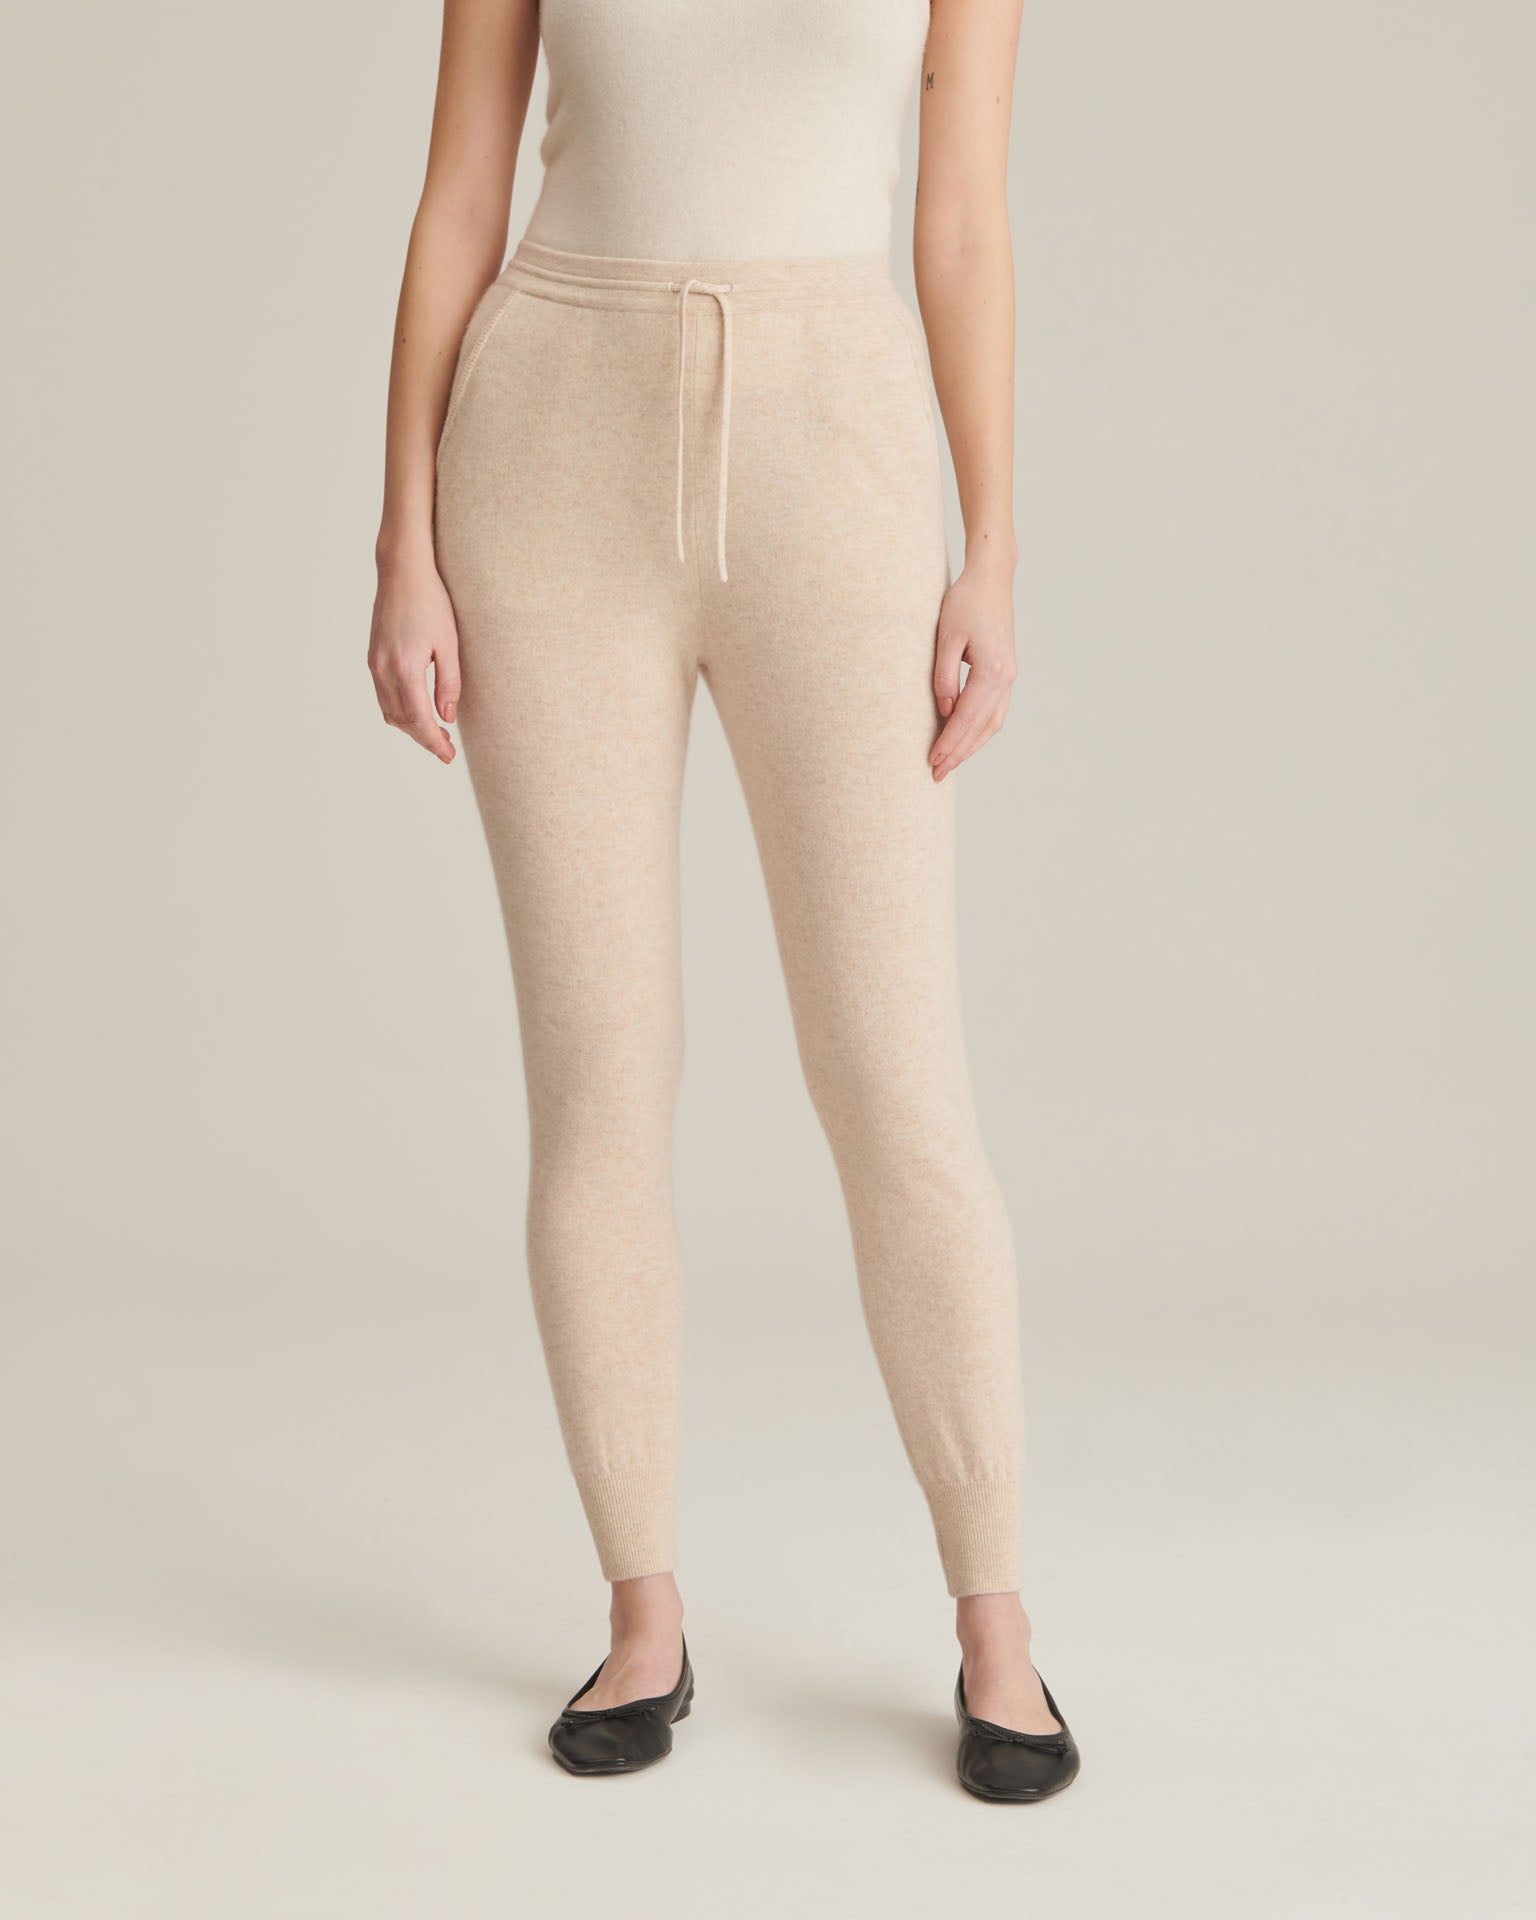 Beige & White Stripe Sweatpants - 100% Mongolian Cashmere